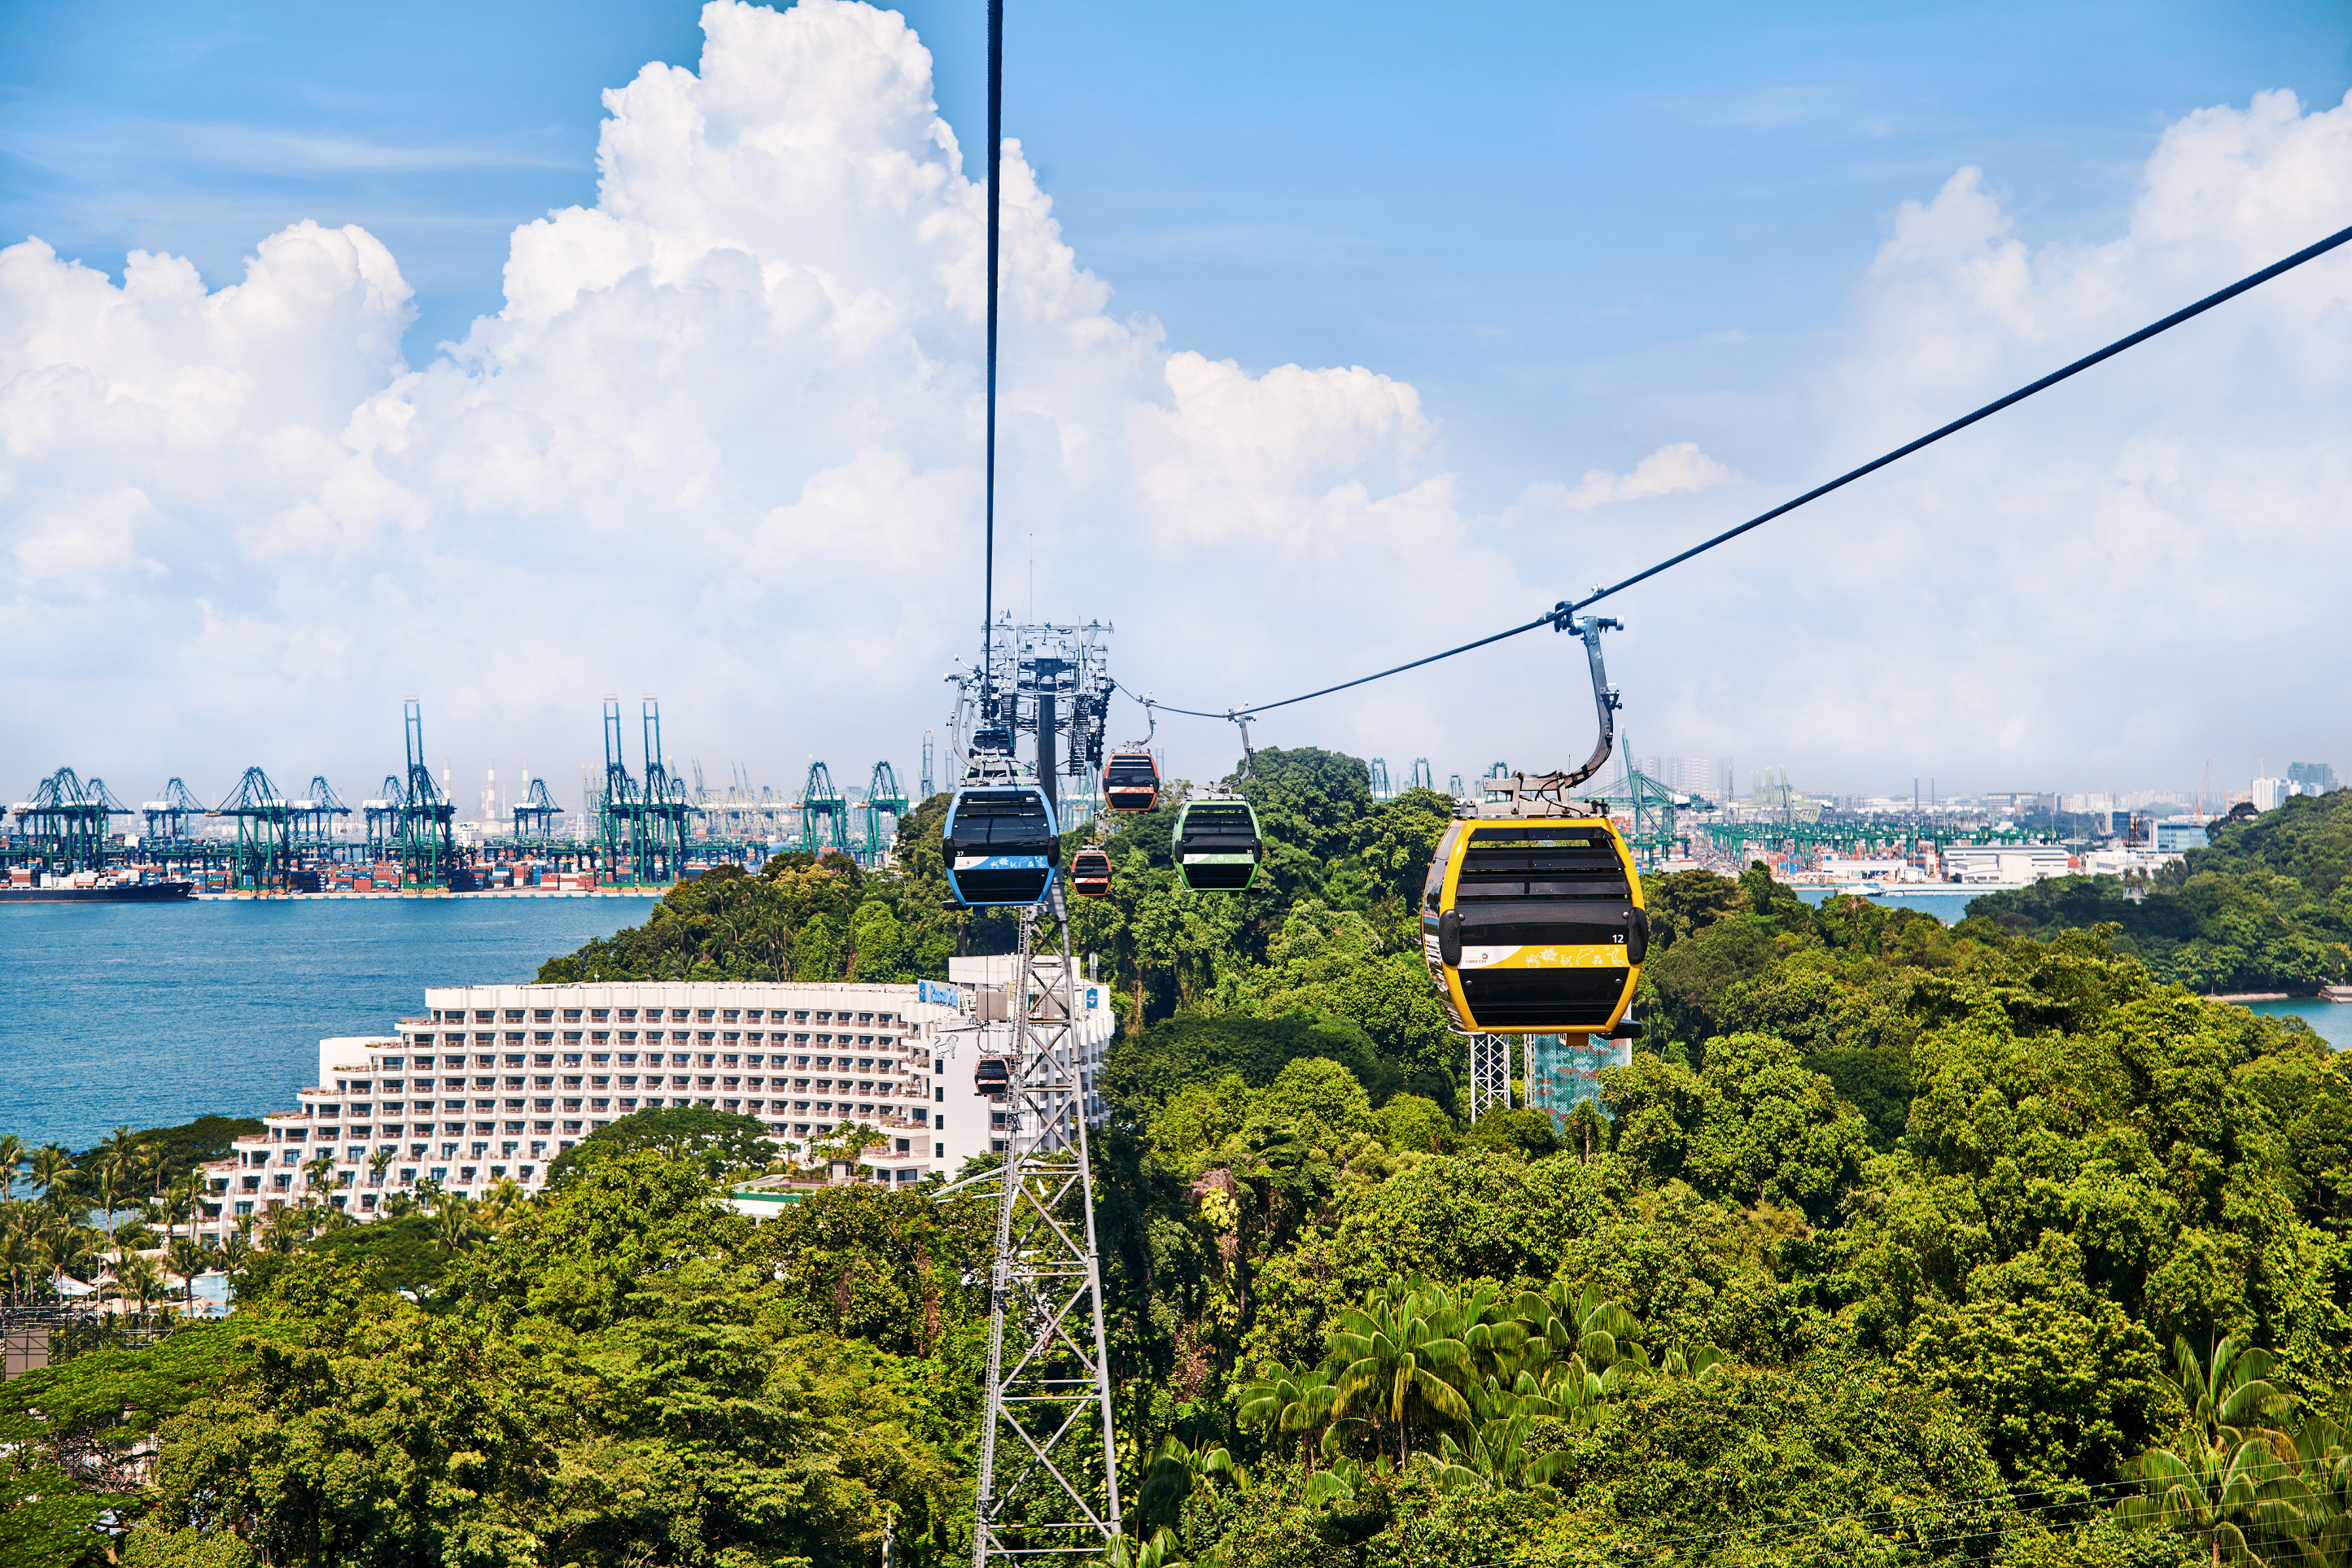 Singapore Cable Car